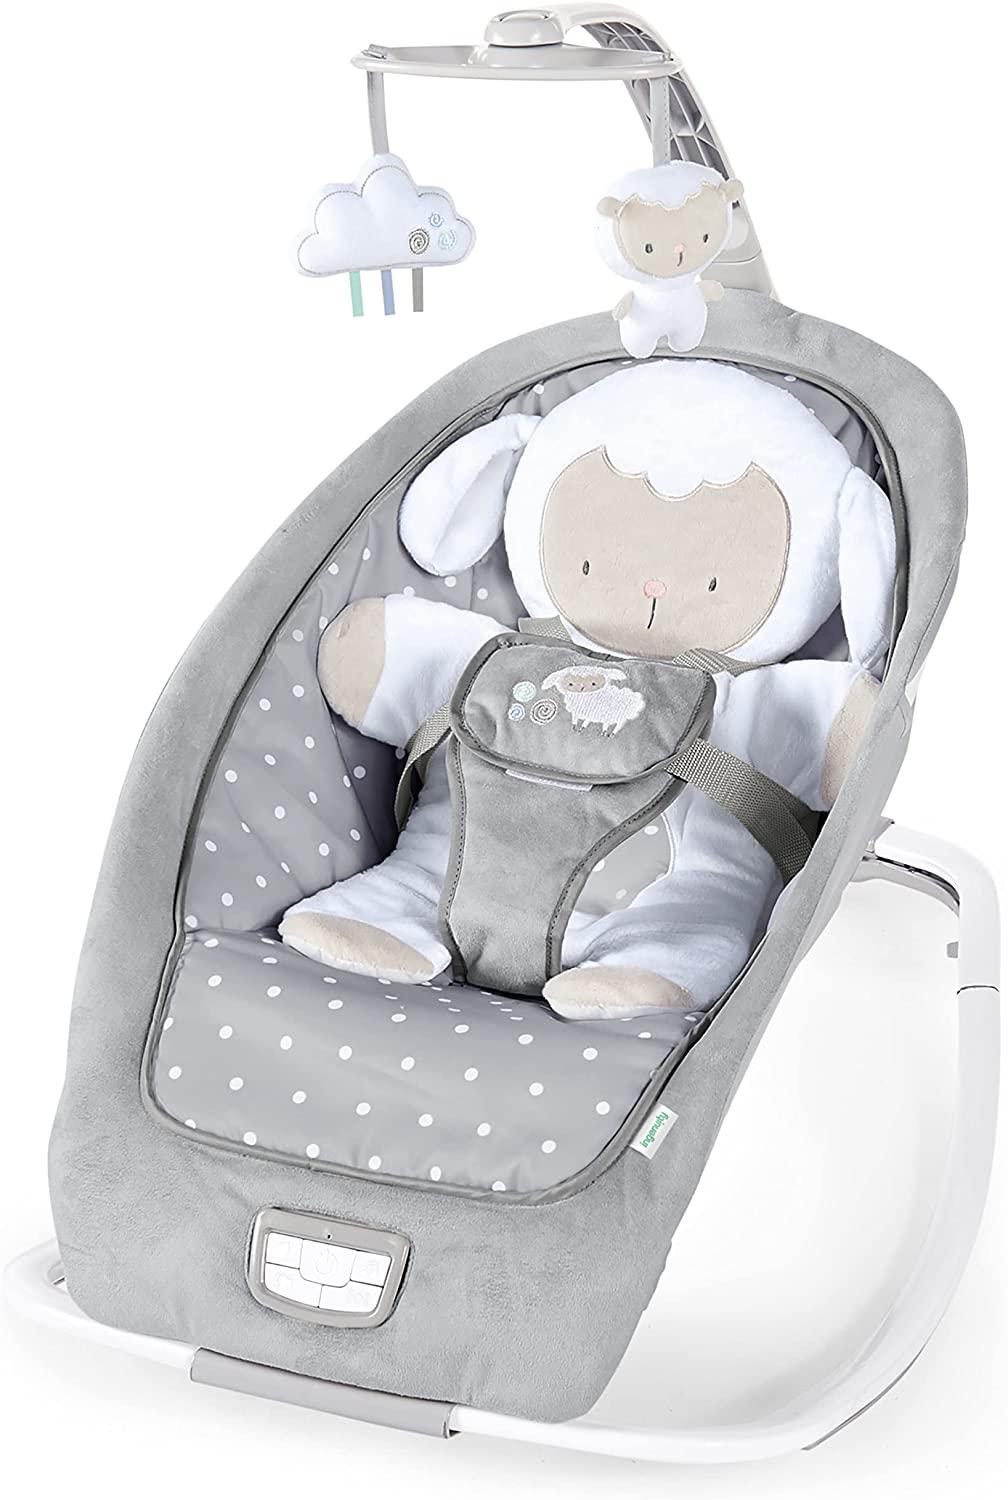 KIDS II Ingenity Ležaljka za bebe Rocking seat Cuddle Lamb sivo-bela